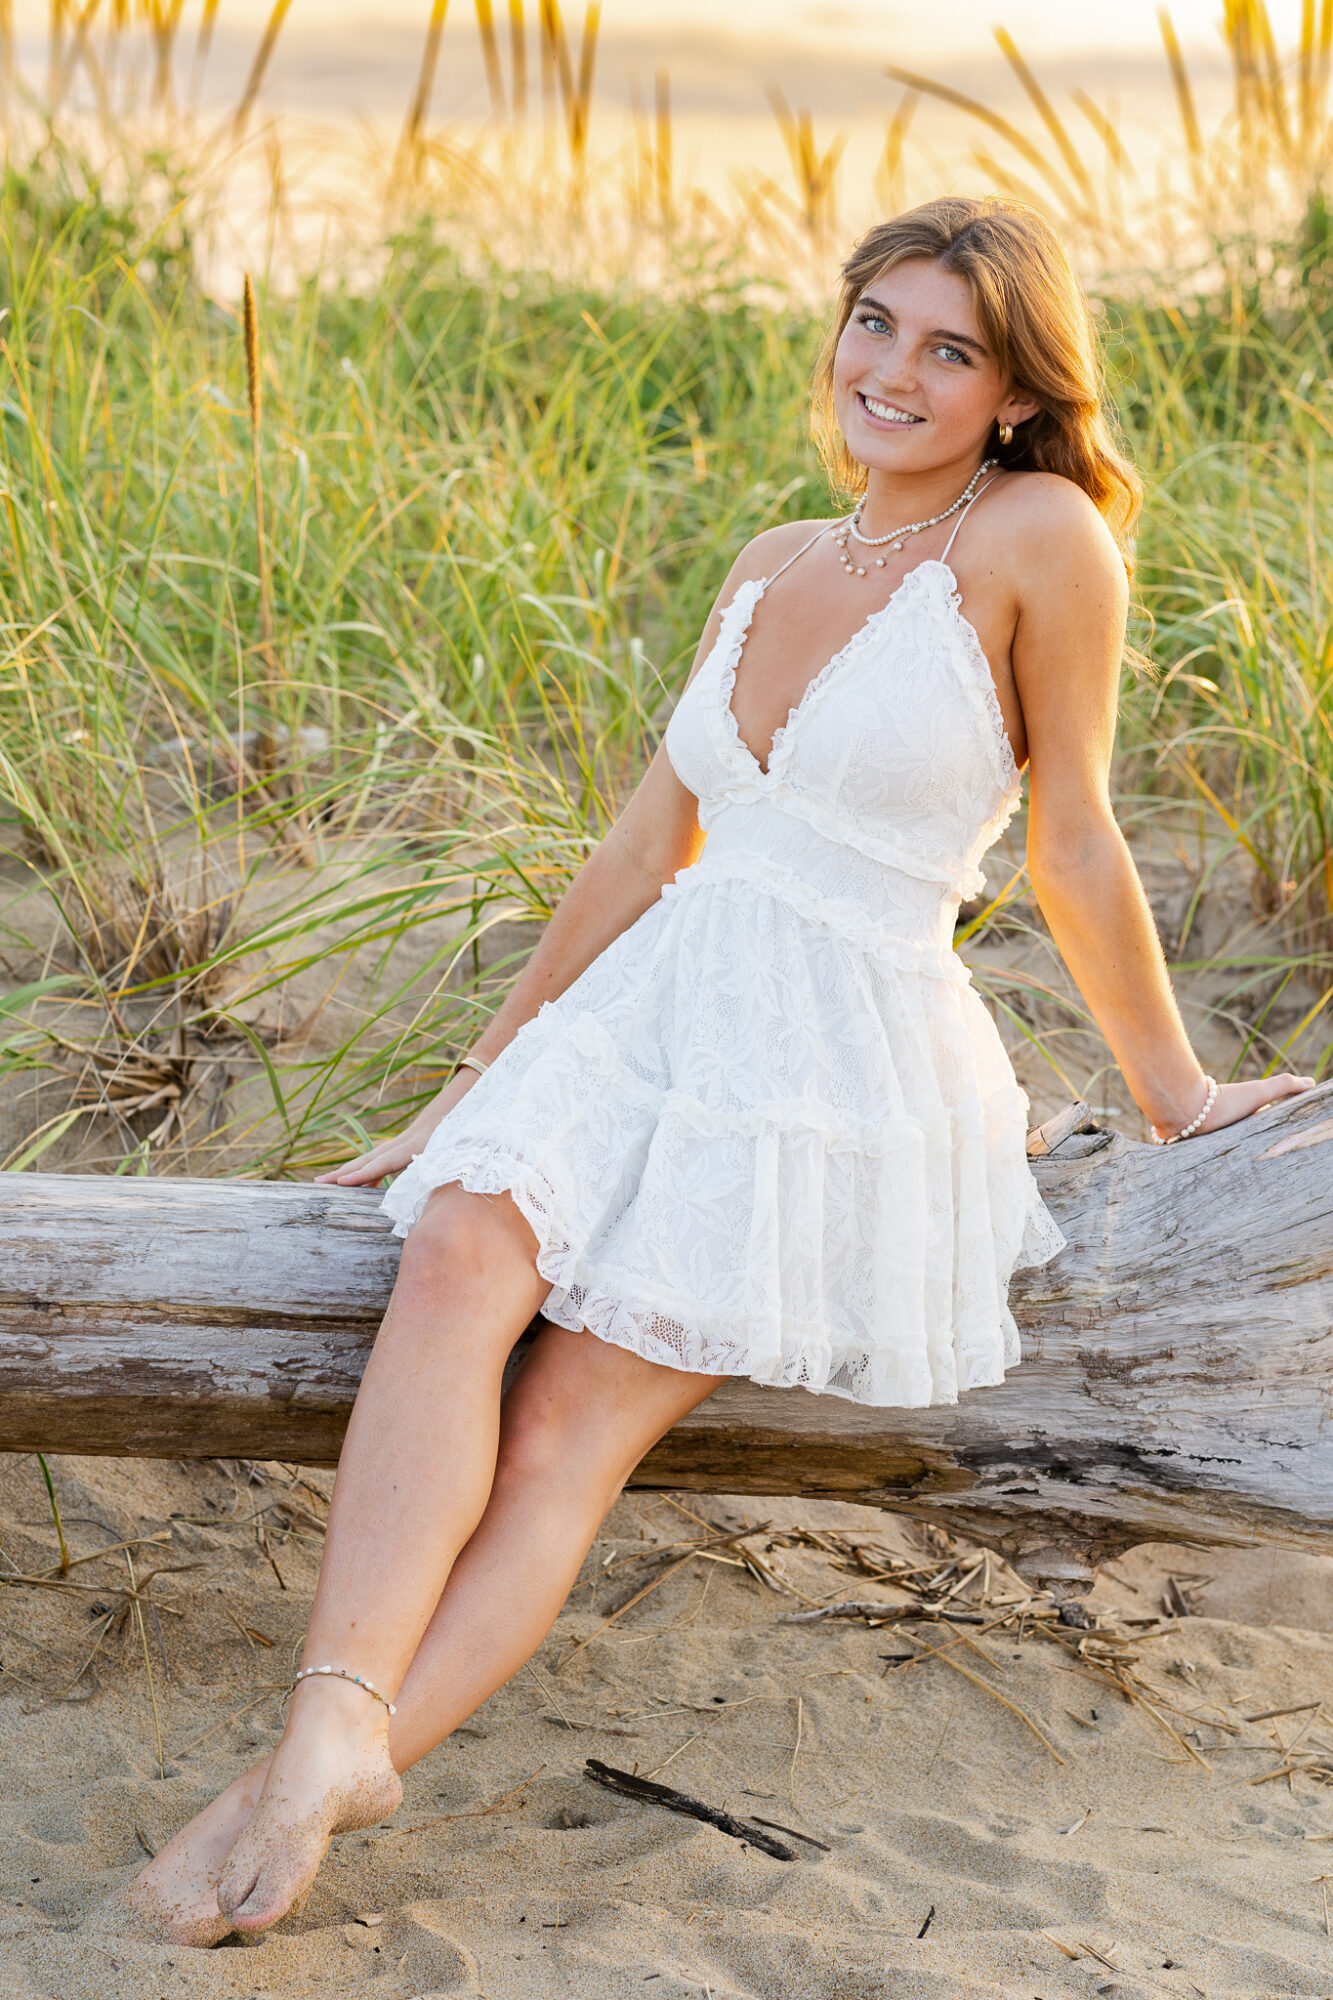 high school senior female wearing white sundress sitting on driftwood at beach